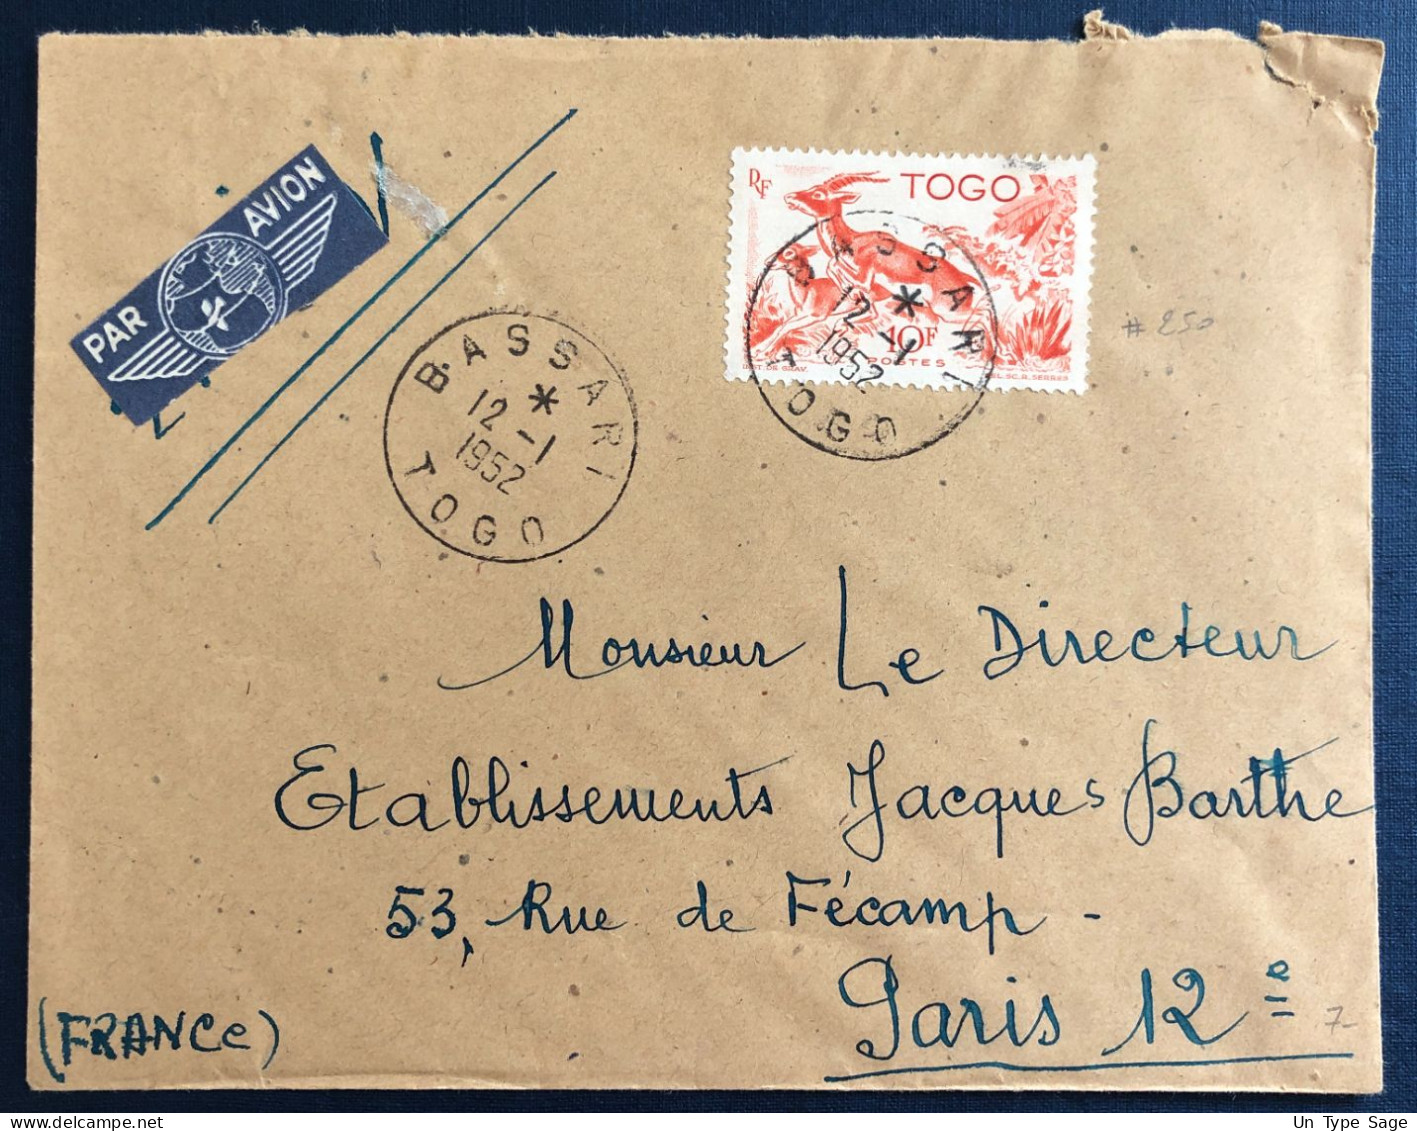 Togo, N°250 Sur Enveloppe TAD BASSARI 12.1.1952 - (B3327) - Covers & Documents